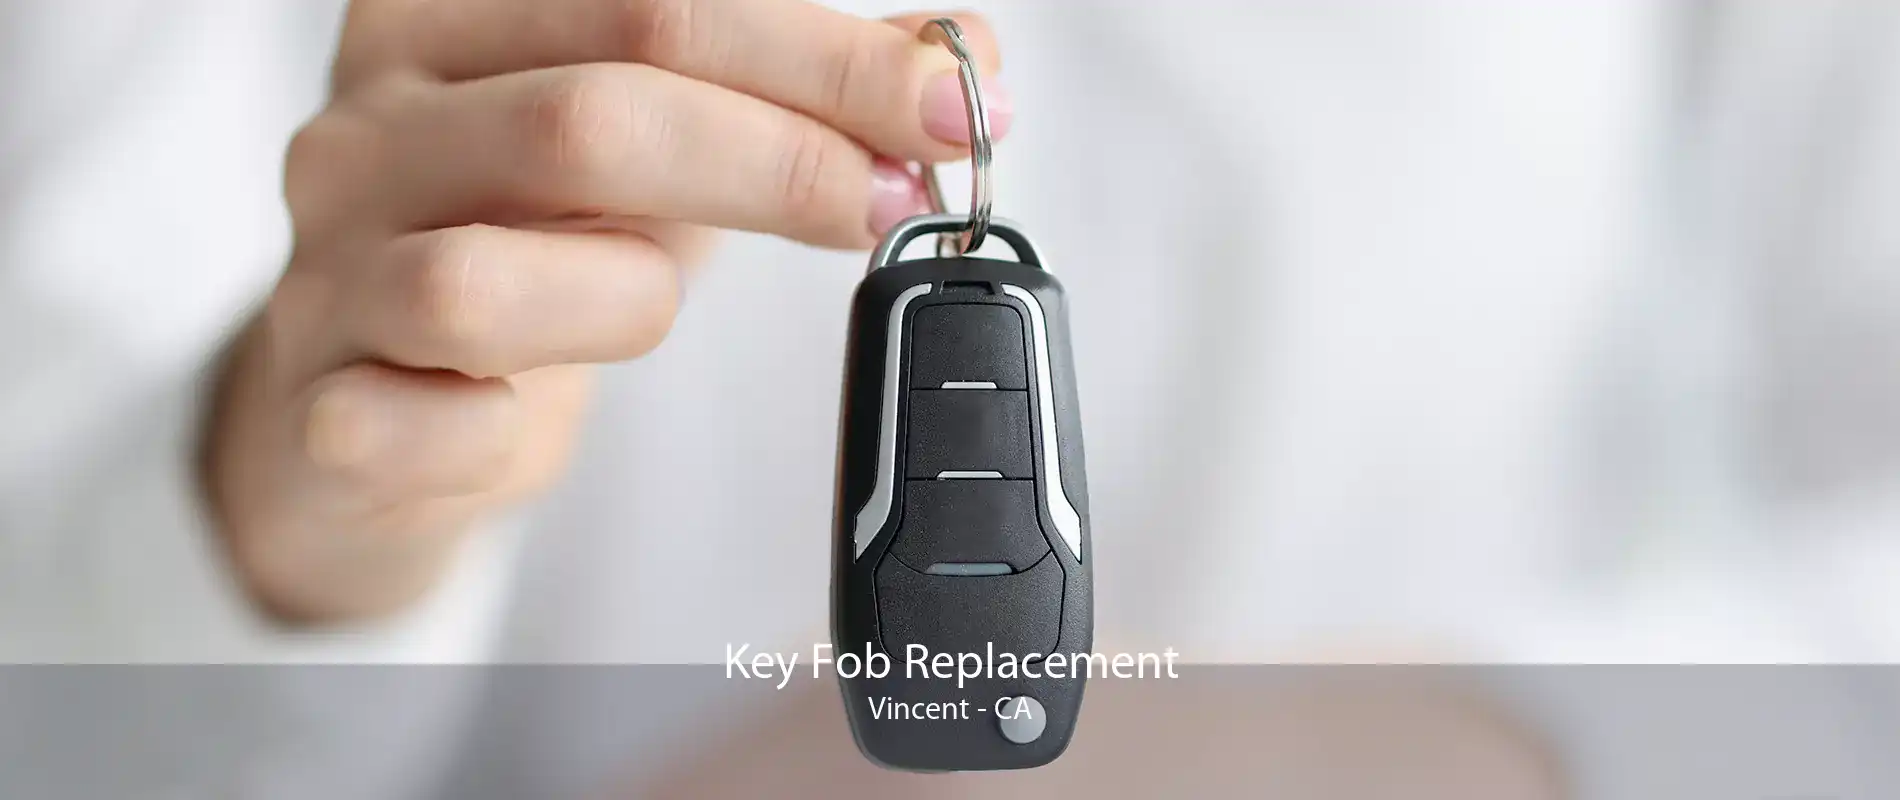 Key Fob Replacement Vincent - CA